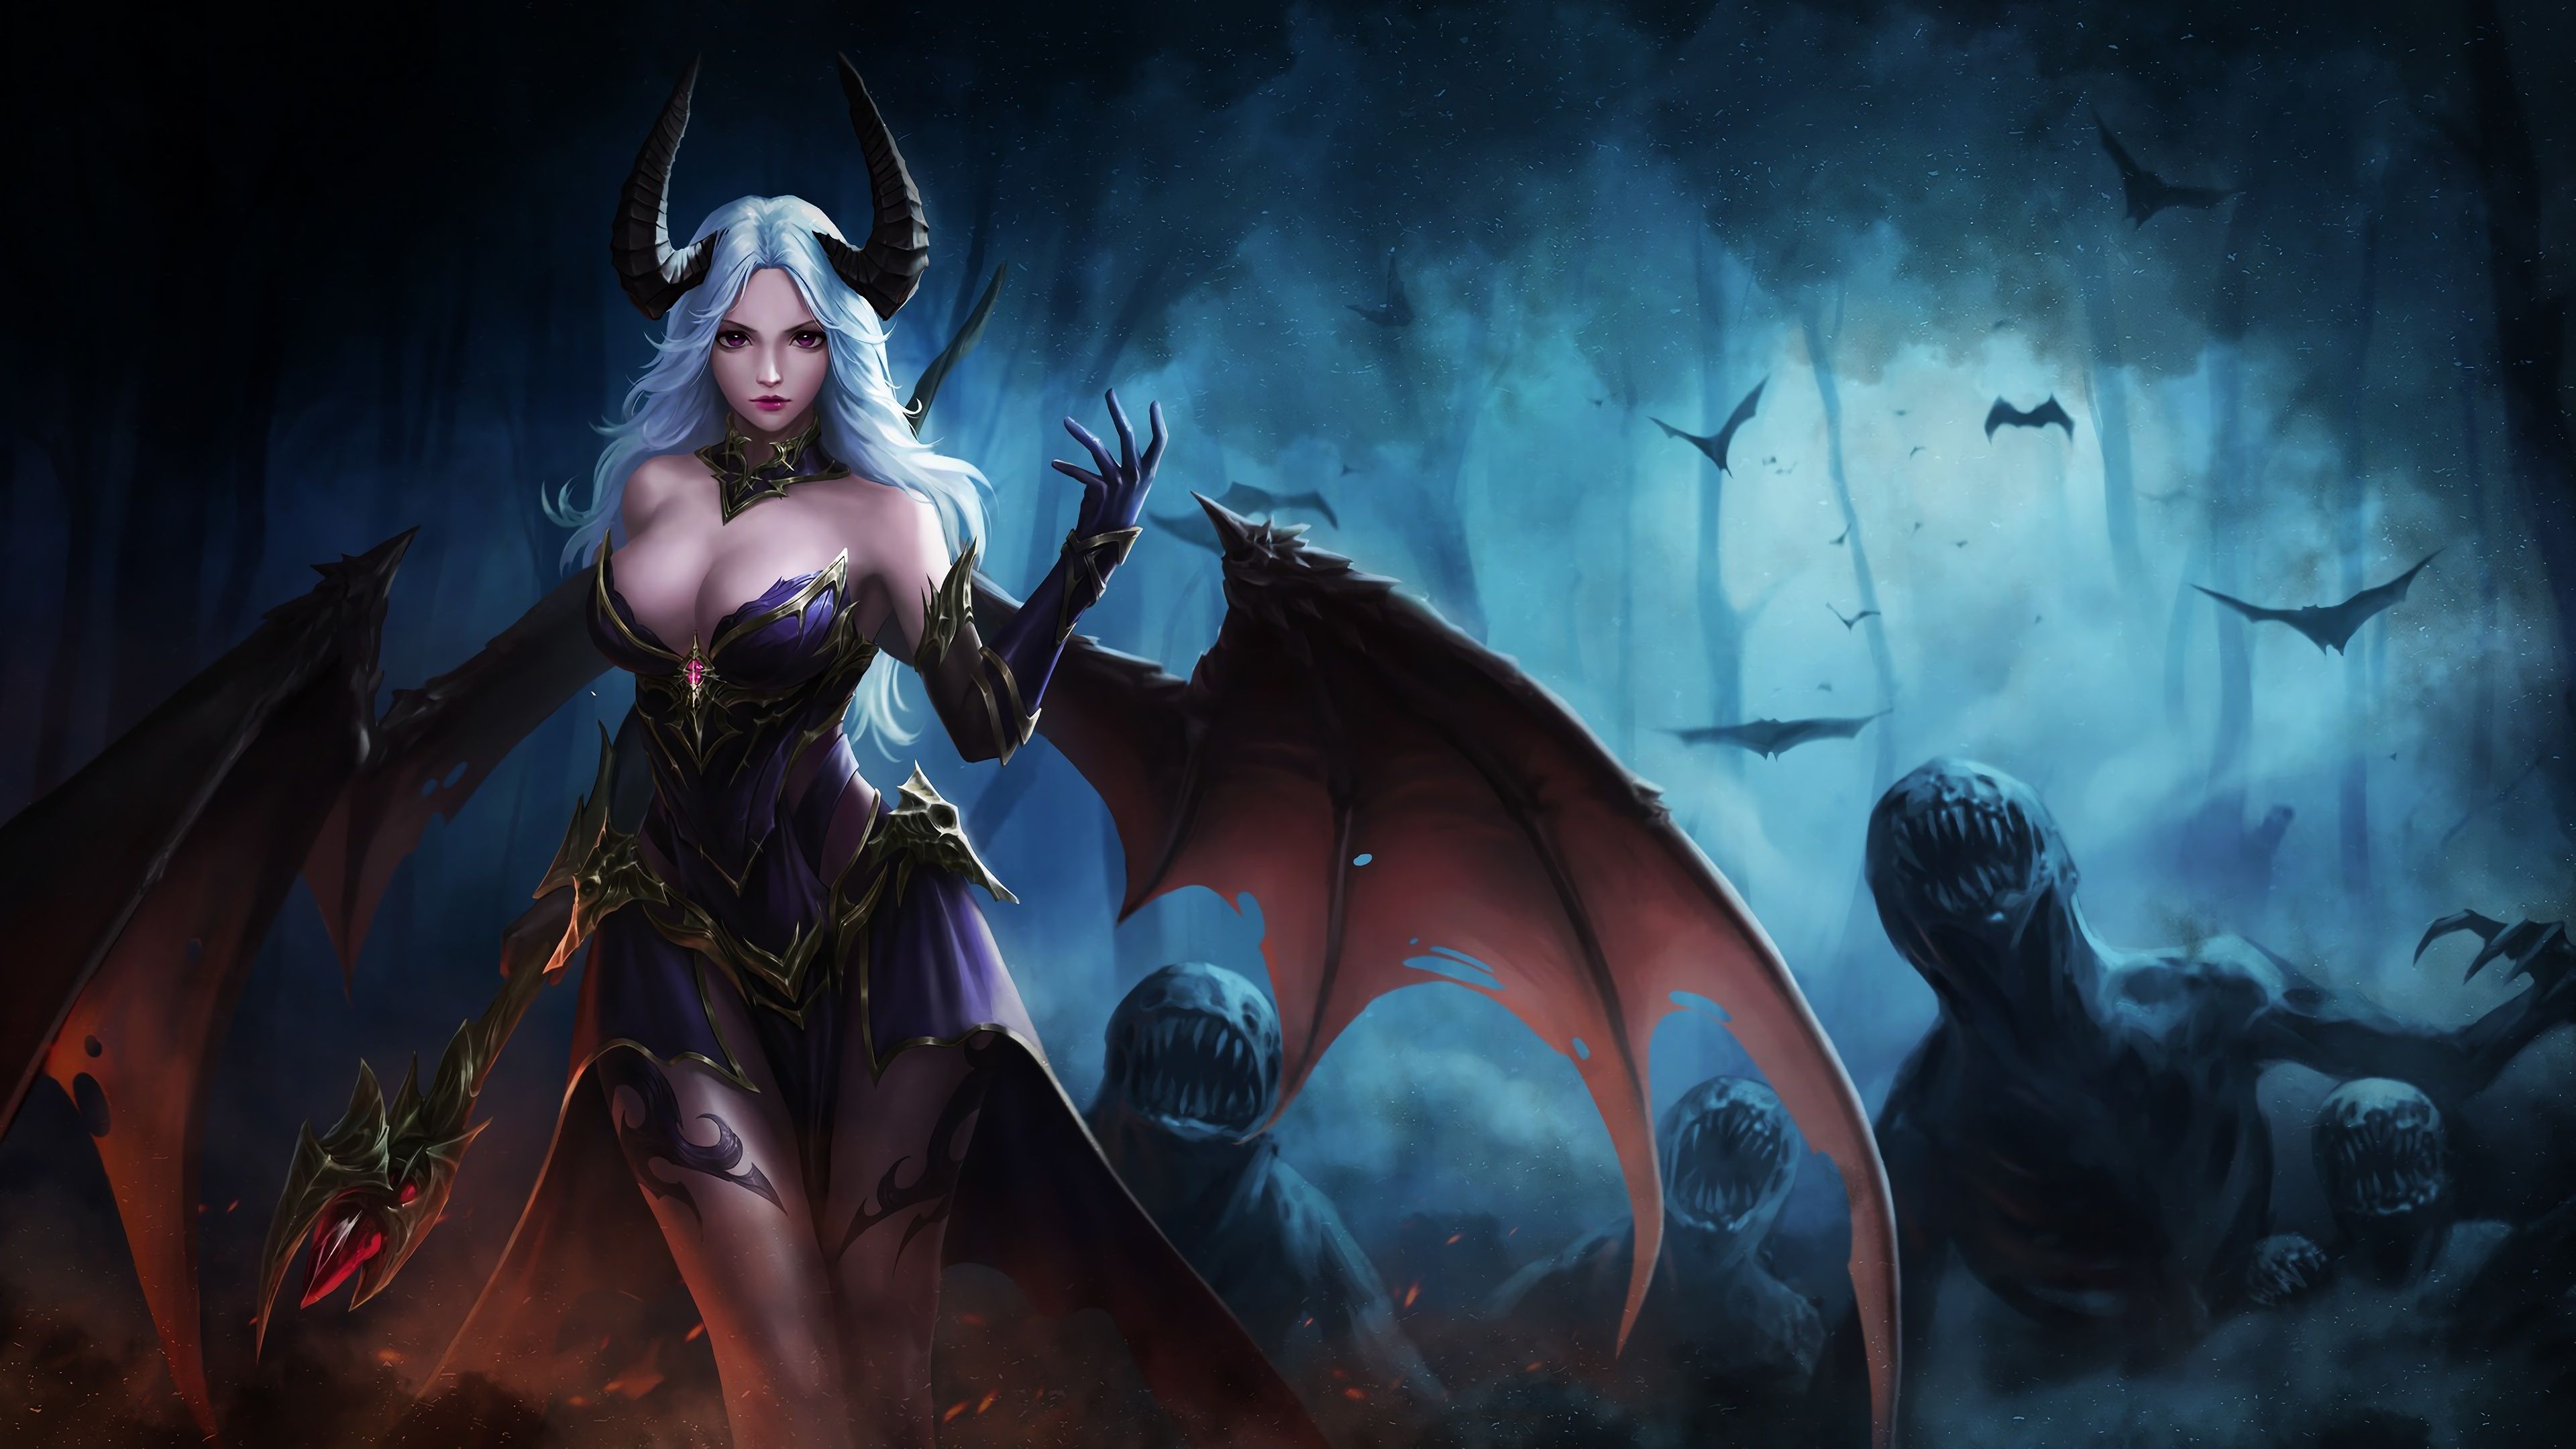 Demon Woman 1400x900 Resolution Wallpaper, HD Fantasy 4K Wallpaper, Image, Photo and Background